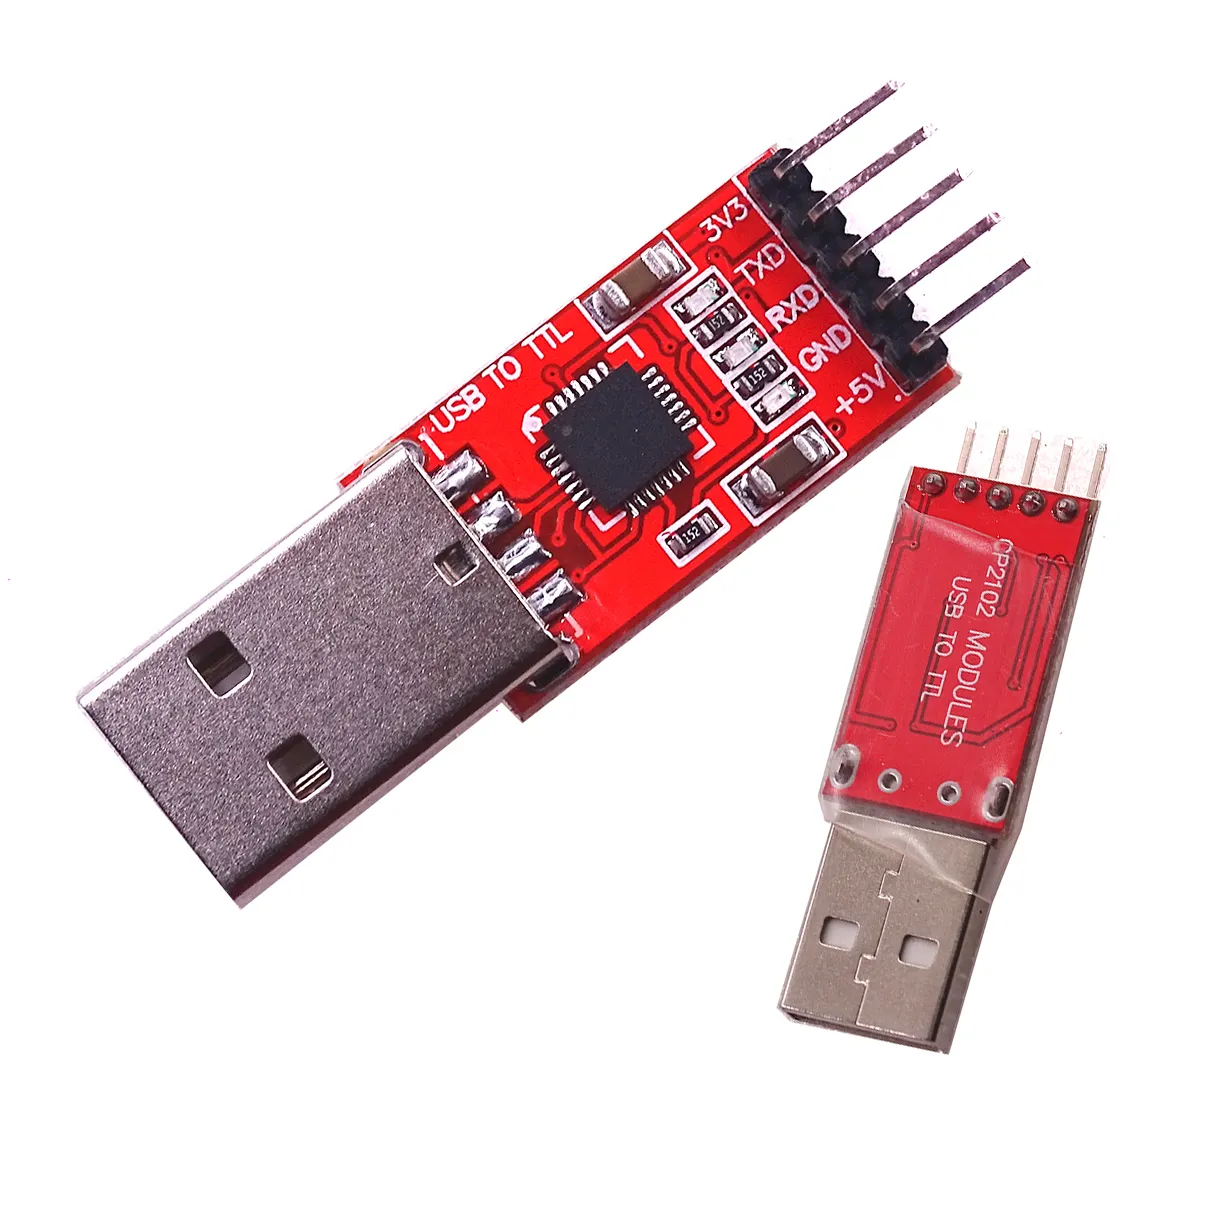 CP2102 모듈 USB TTL 직렬 UART STC 다운로드 케이블 PL2303 슈퍼 브러시 라인 업그레이드 레드